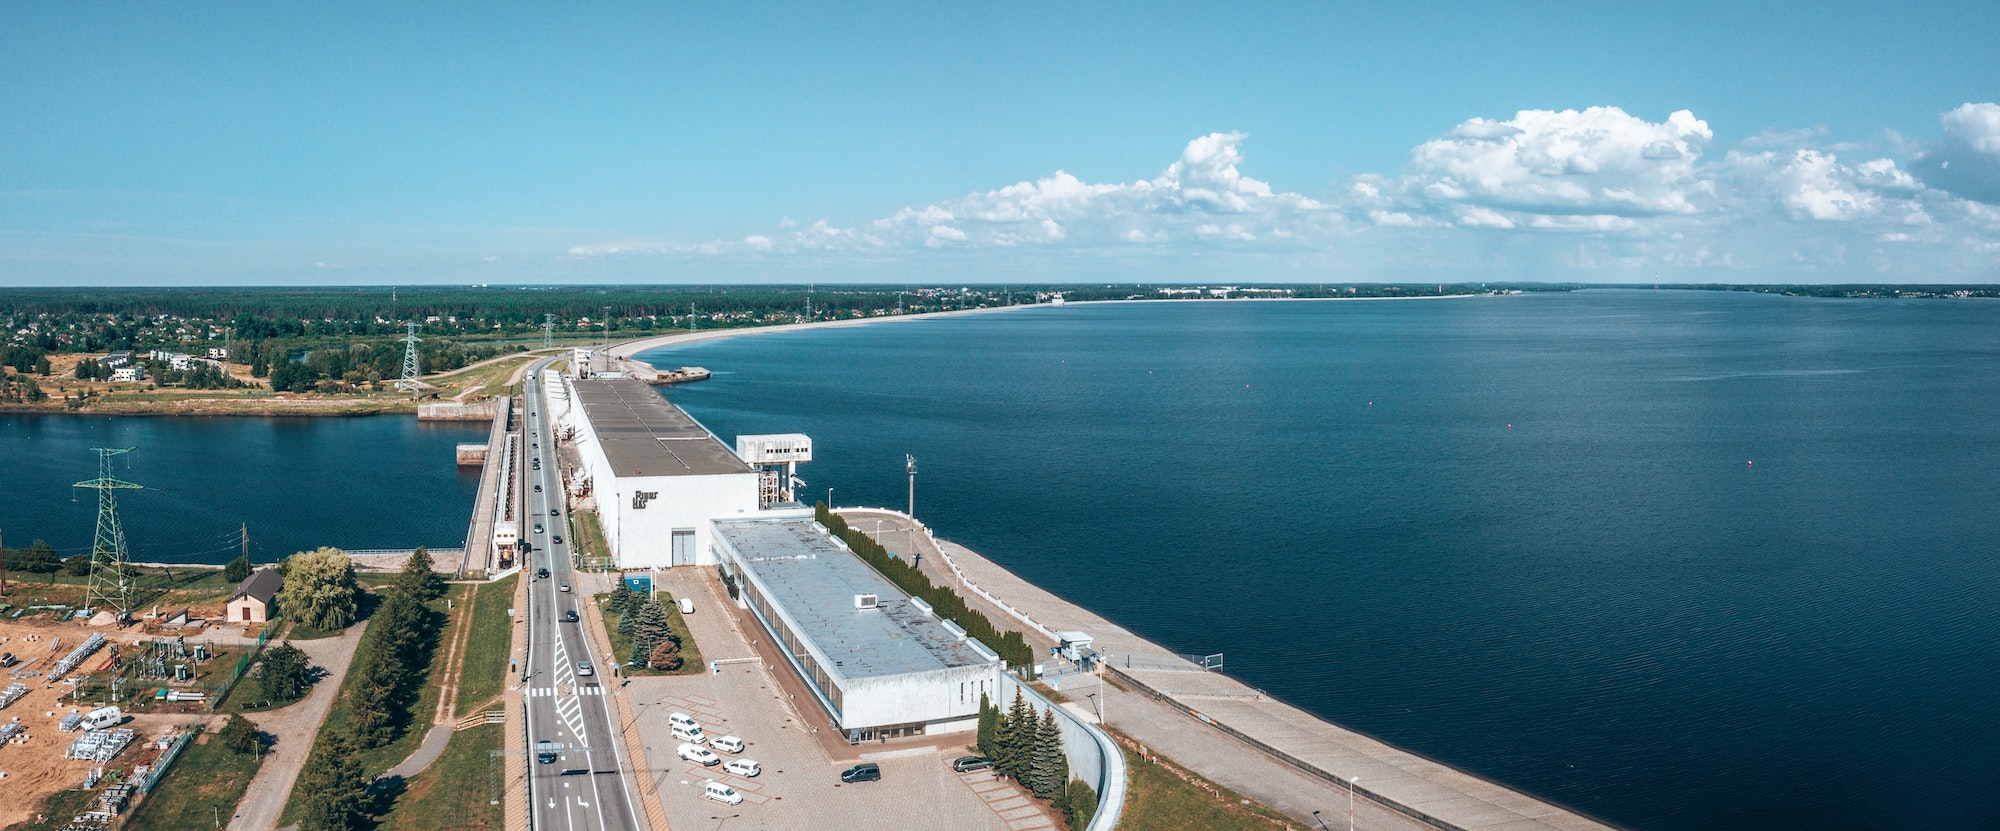 Riga Hydroelectric Power Plant, Latvia